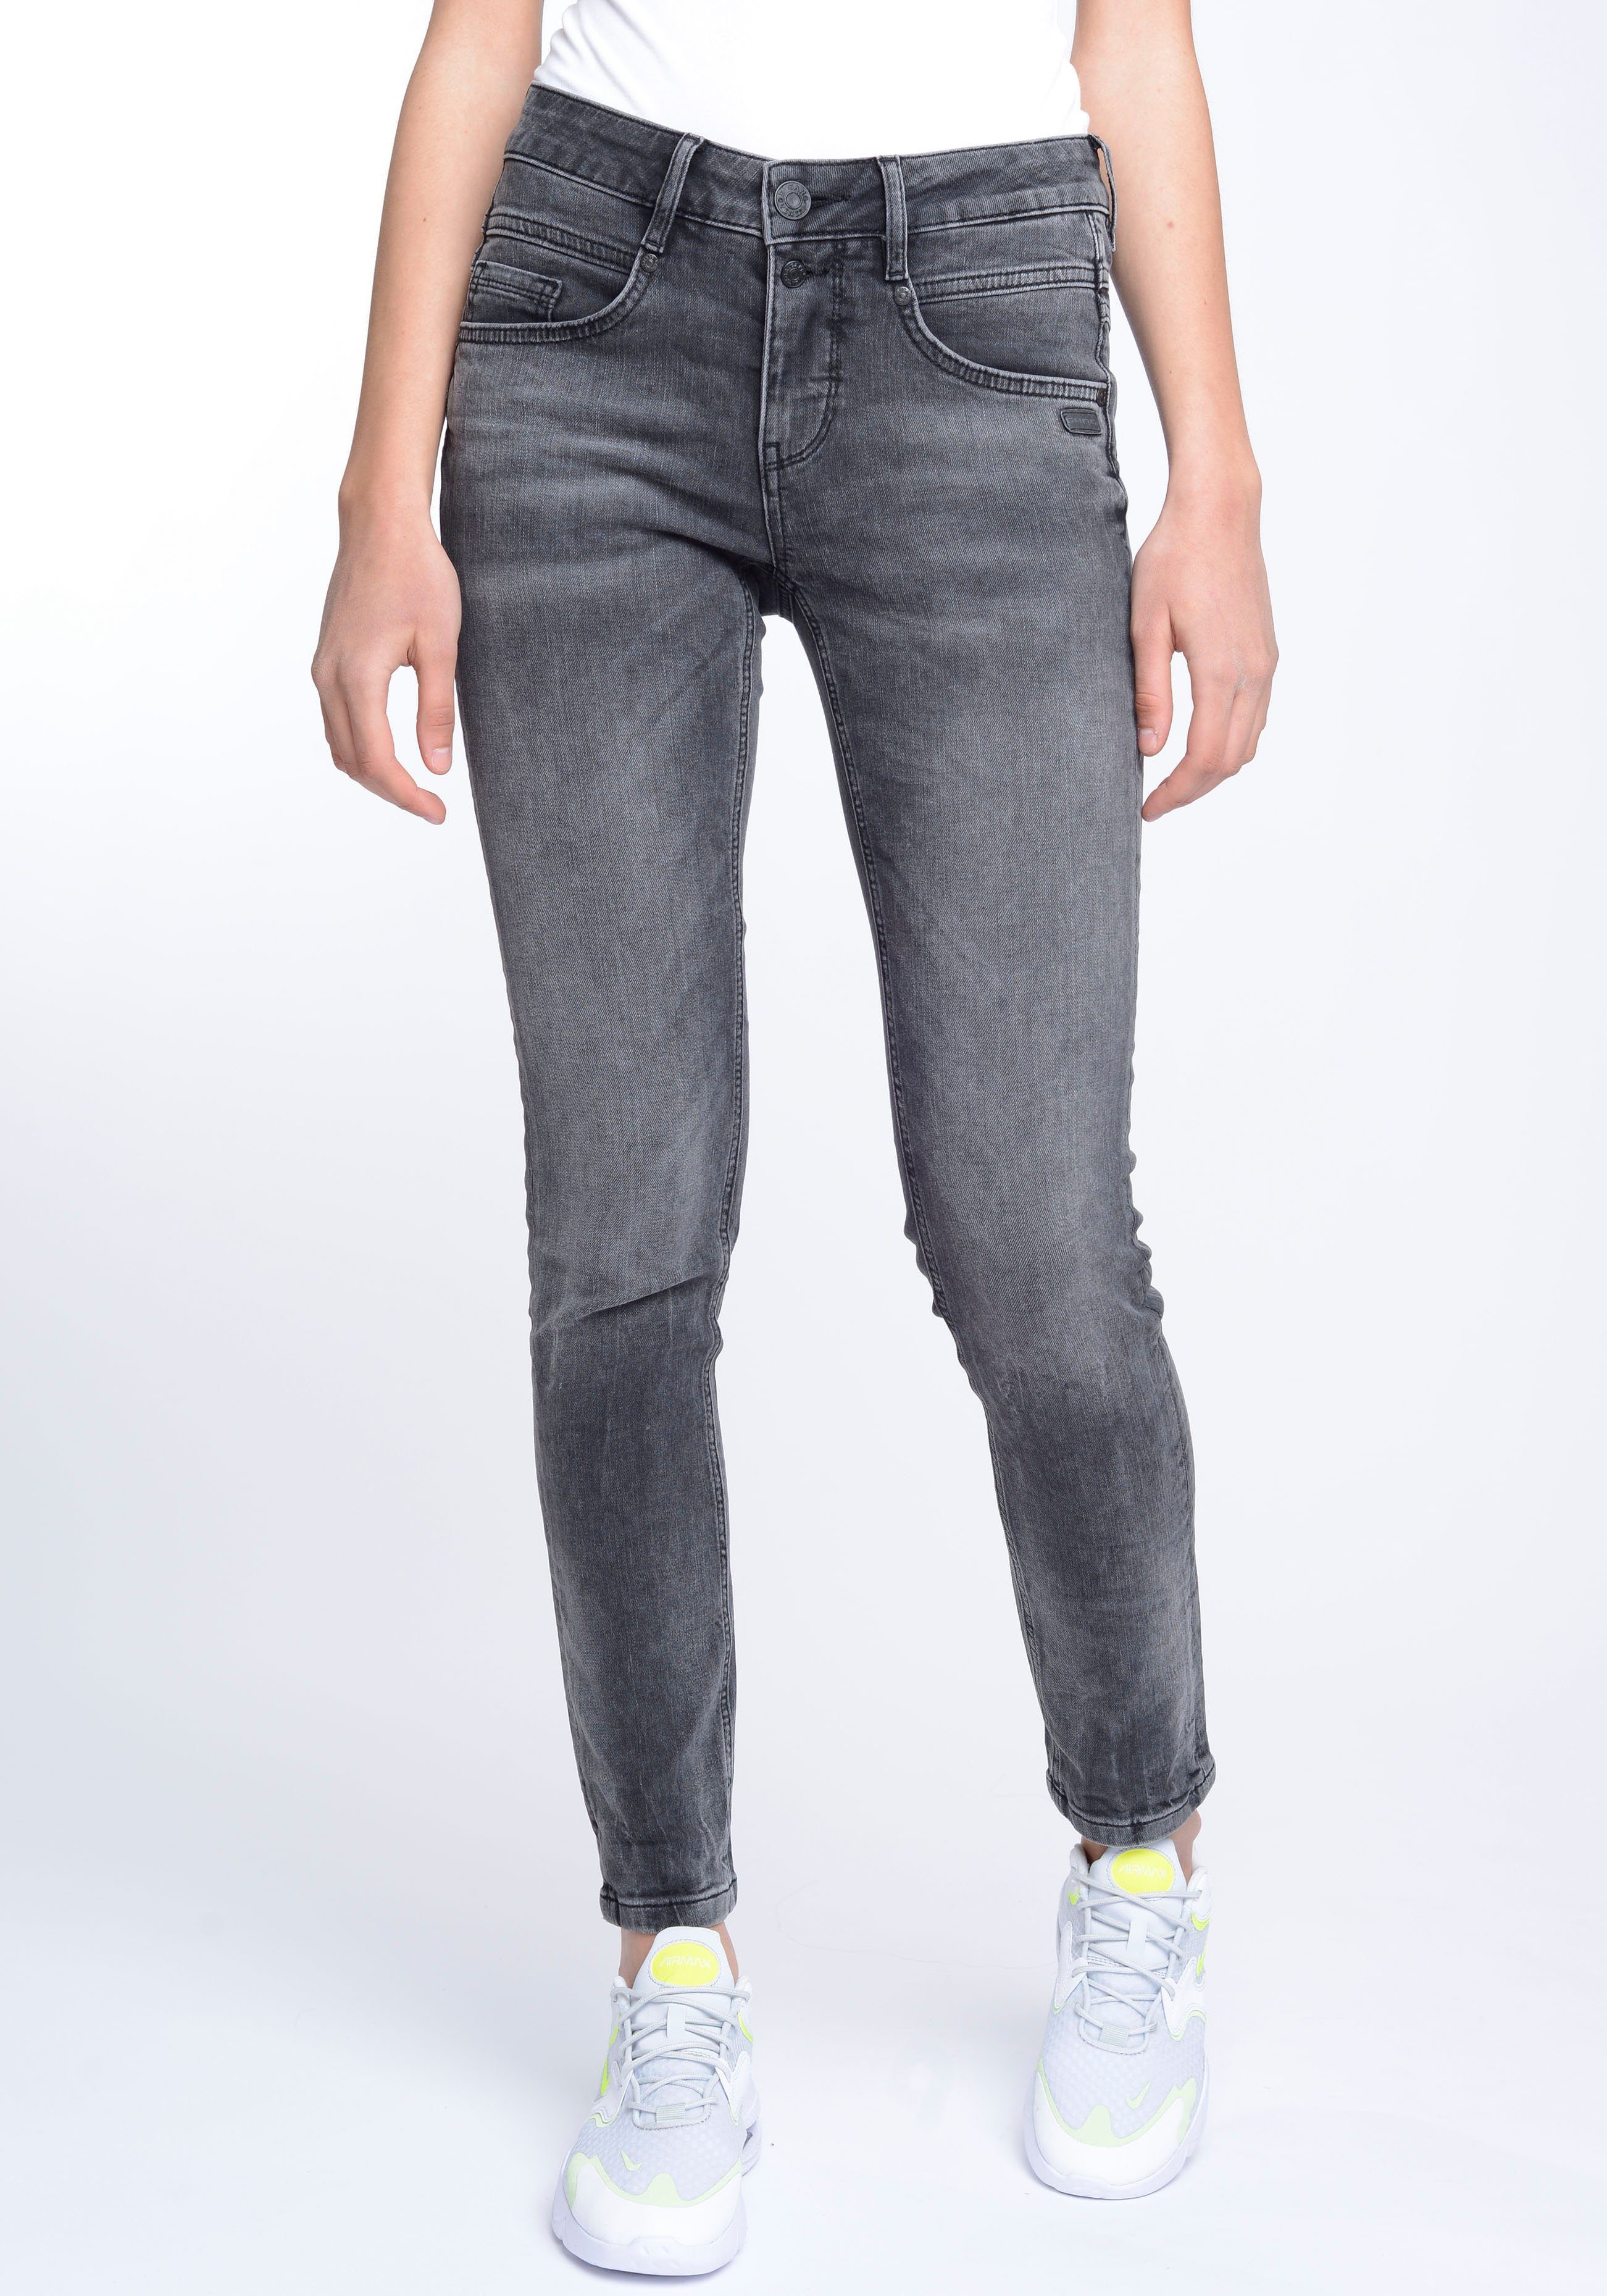 GANG Skinny-fit-Jeans 94MORA mit 3-Knopf-Verschluss und Passe vorne black used | Stretchjeans